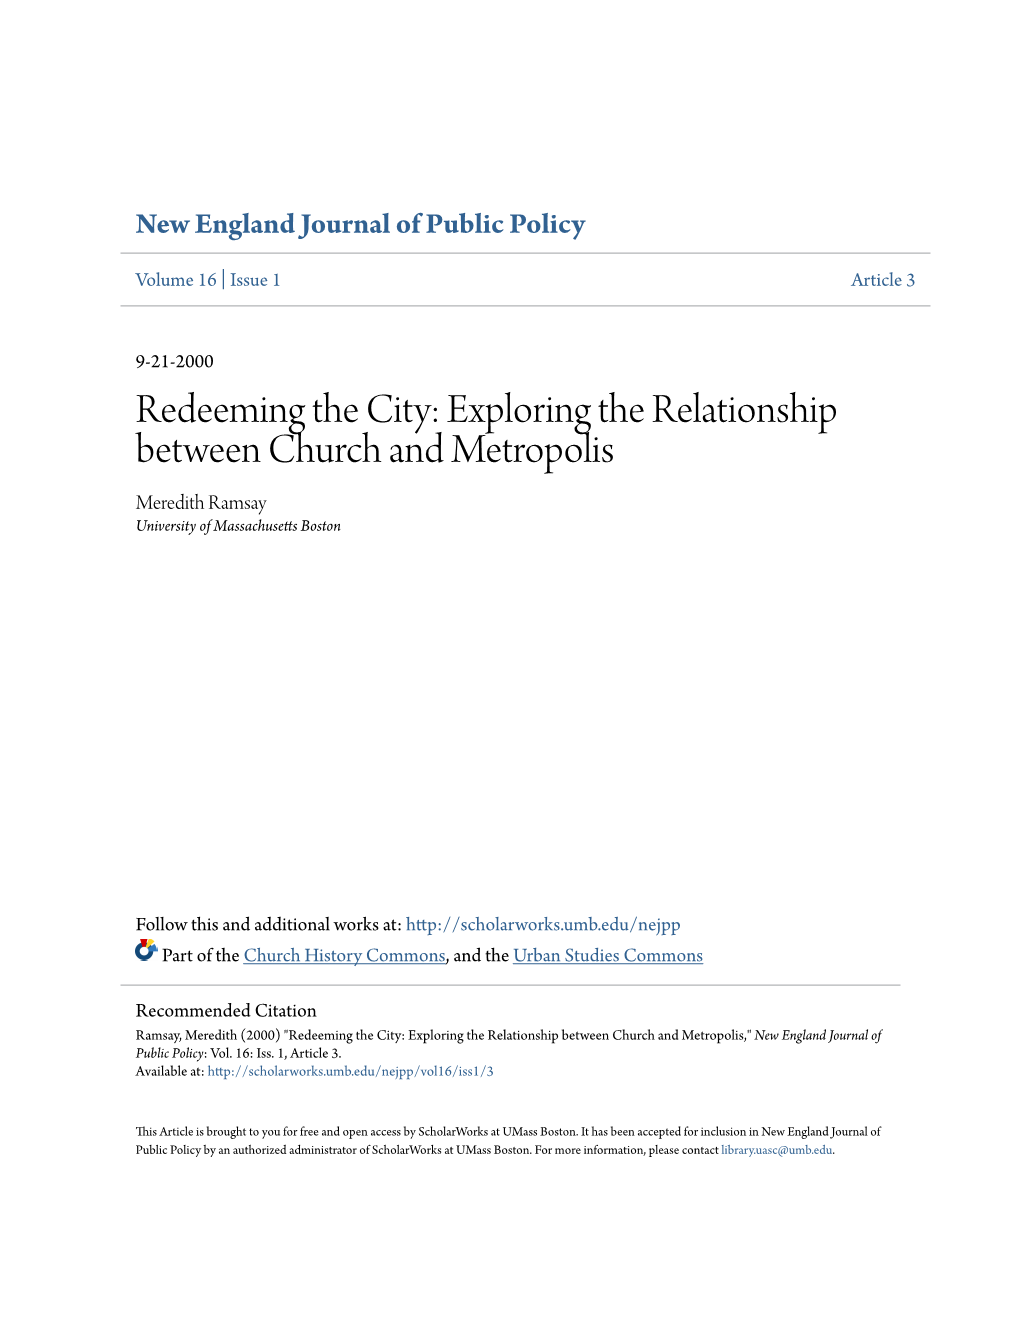 Redeeming the City: Exploring the Relationship Between Church and Metropolis Meredith Ramsay University of Massachusetts Boston